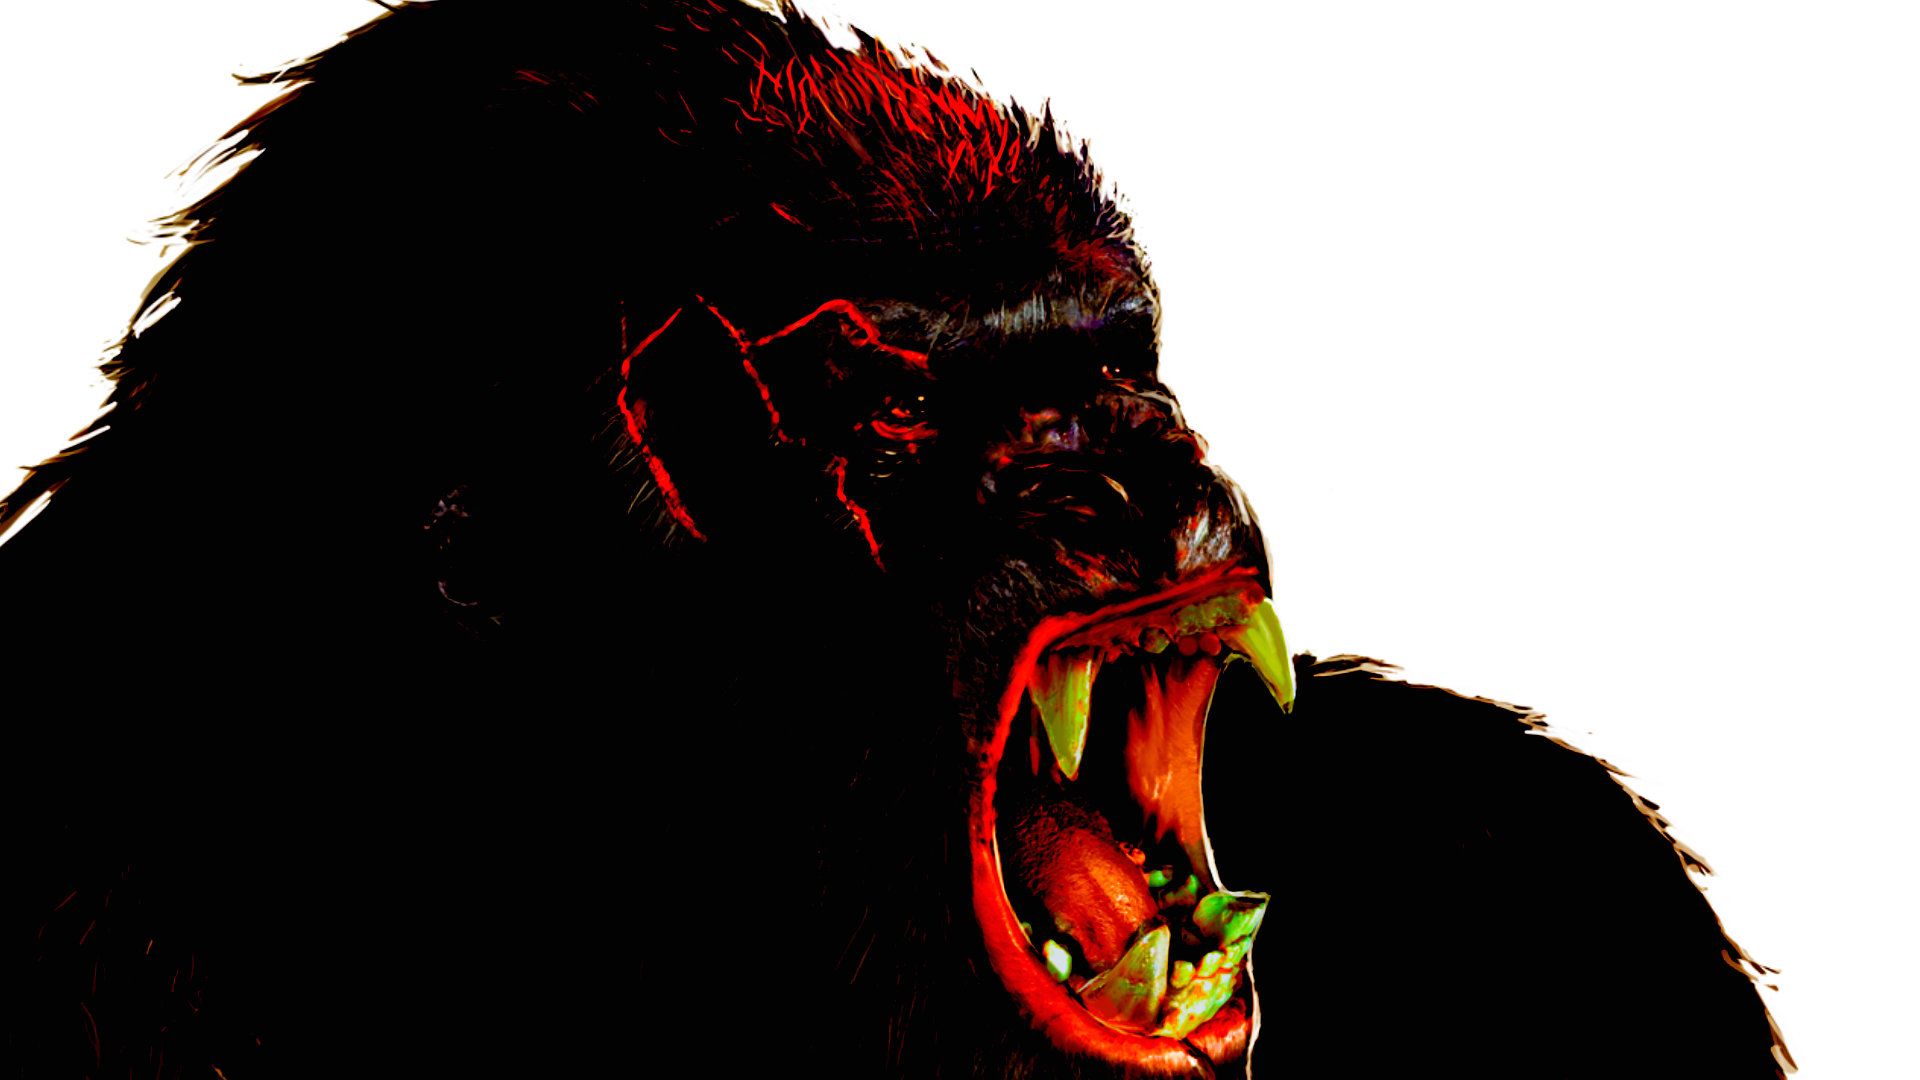 King Kong background